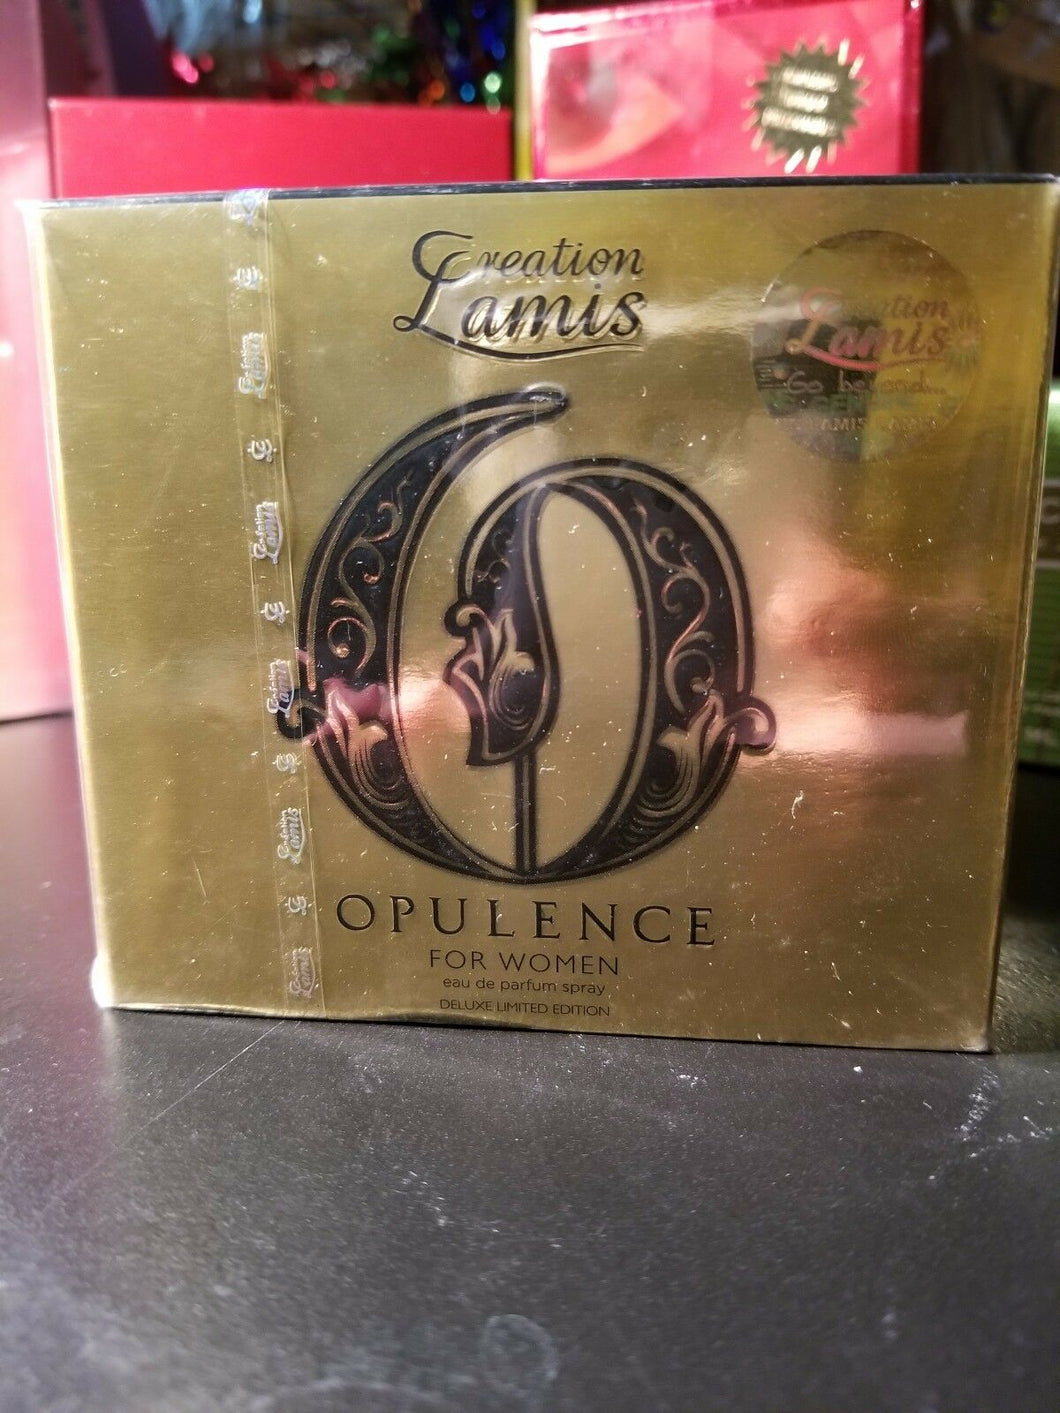 Opulence For Women 3.3 oz 100 ml Eau de Parfum Spray by Creation Lamis DELUXE ED - Perfume Gallery